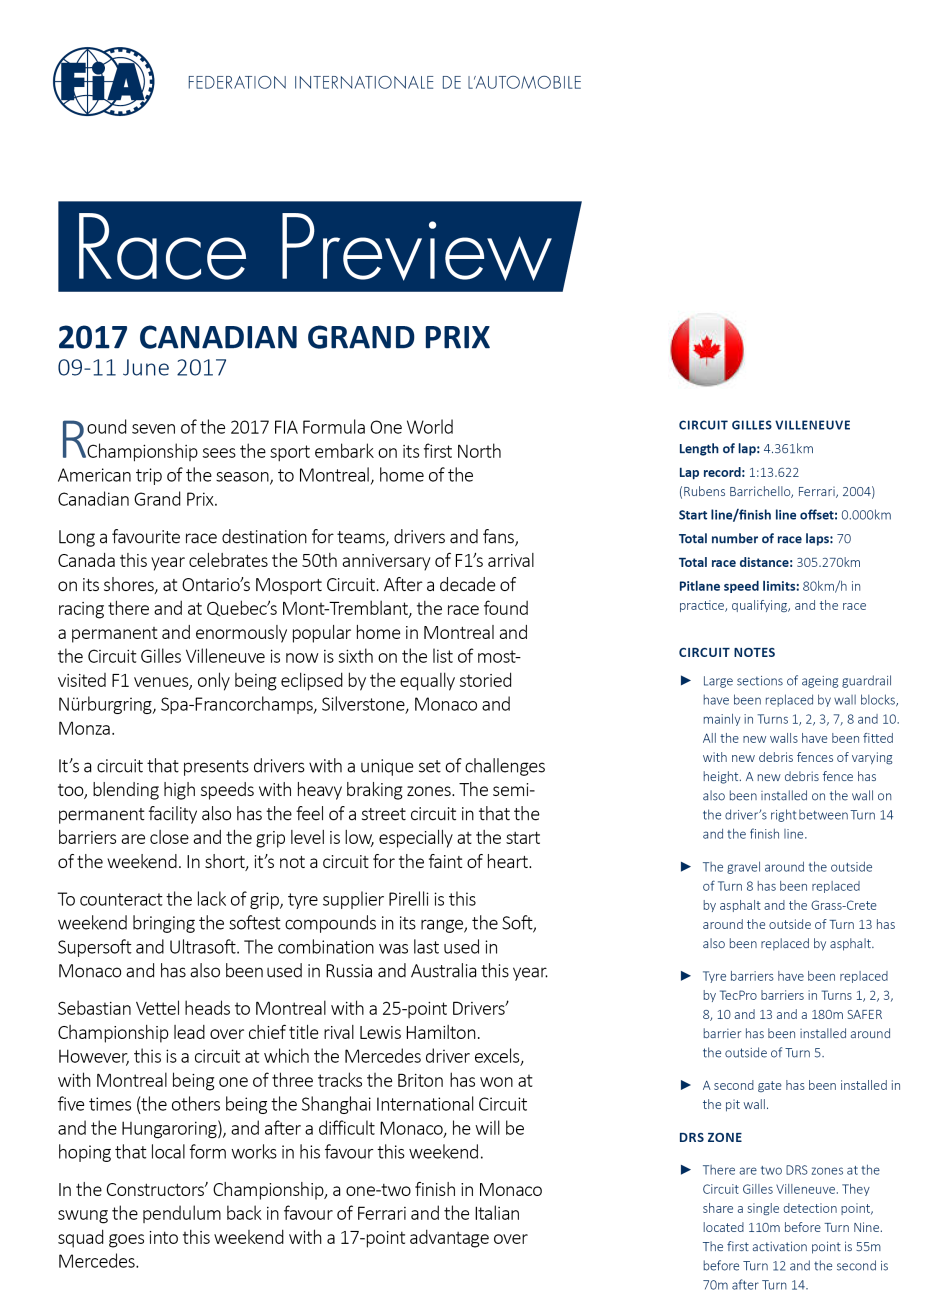 F1, Canadian Grand Prix, Formula 1, FIA